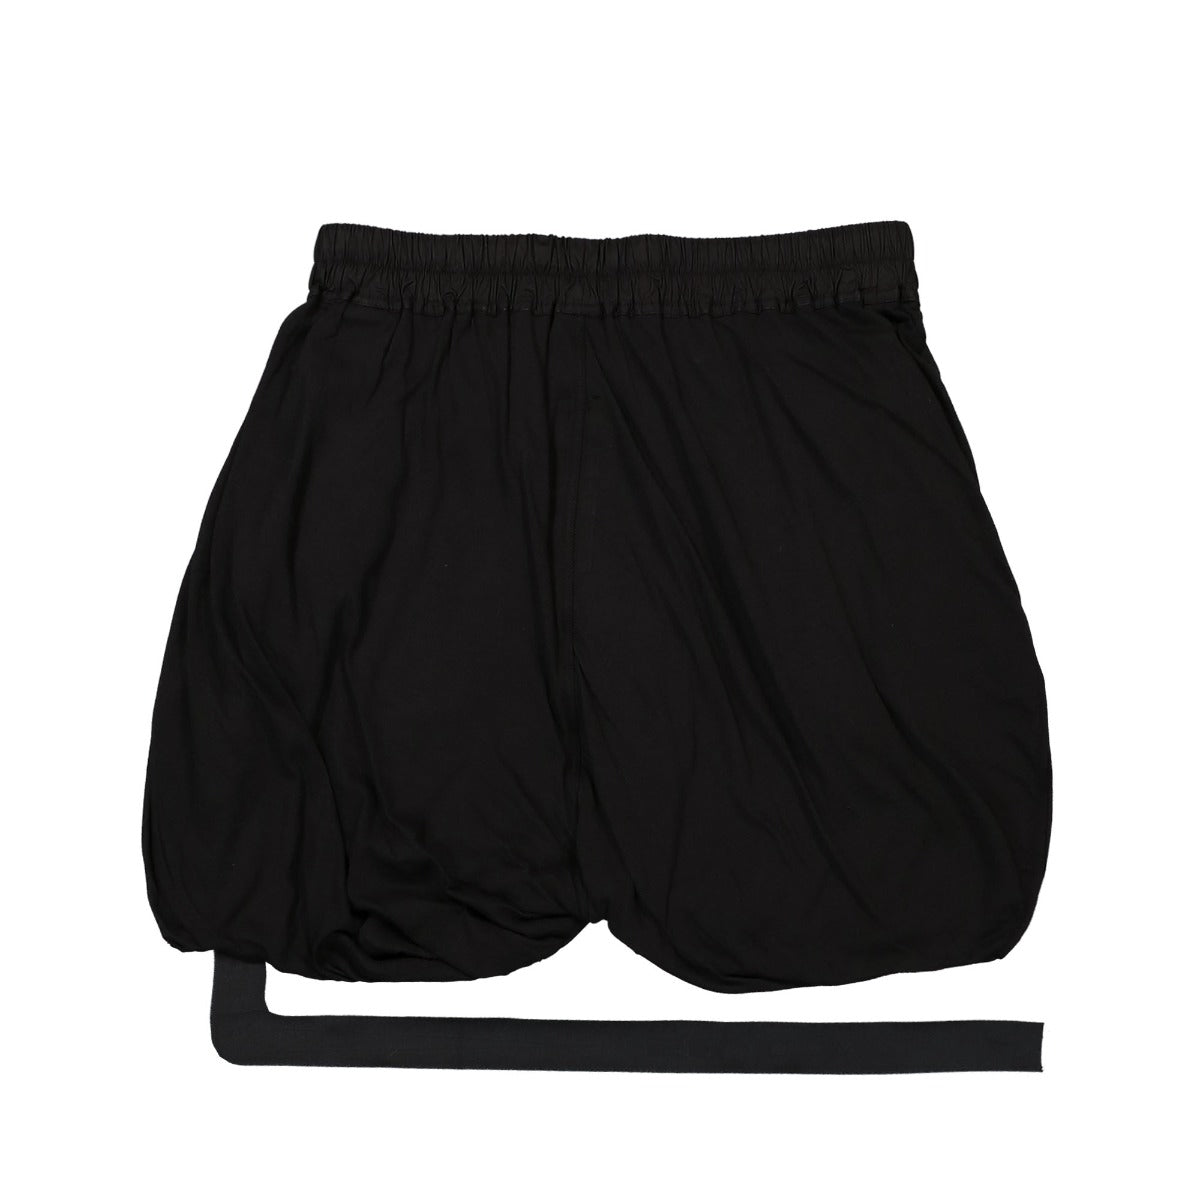 Phleg Doubled Boxers Knit Shorts